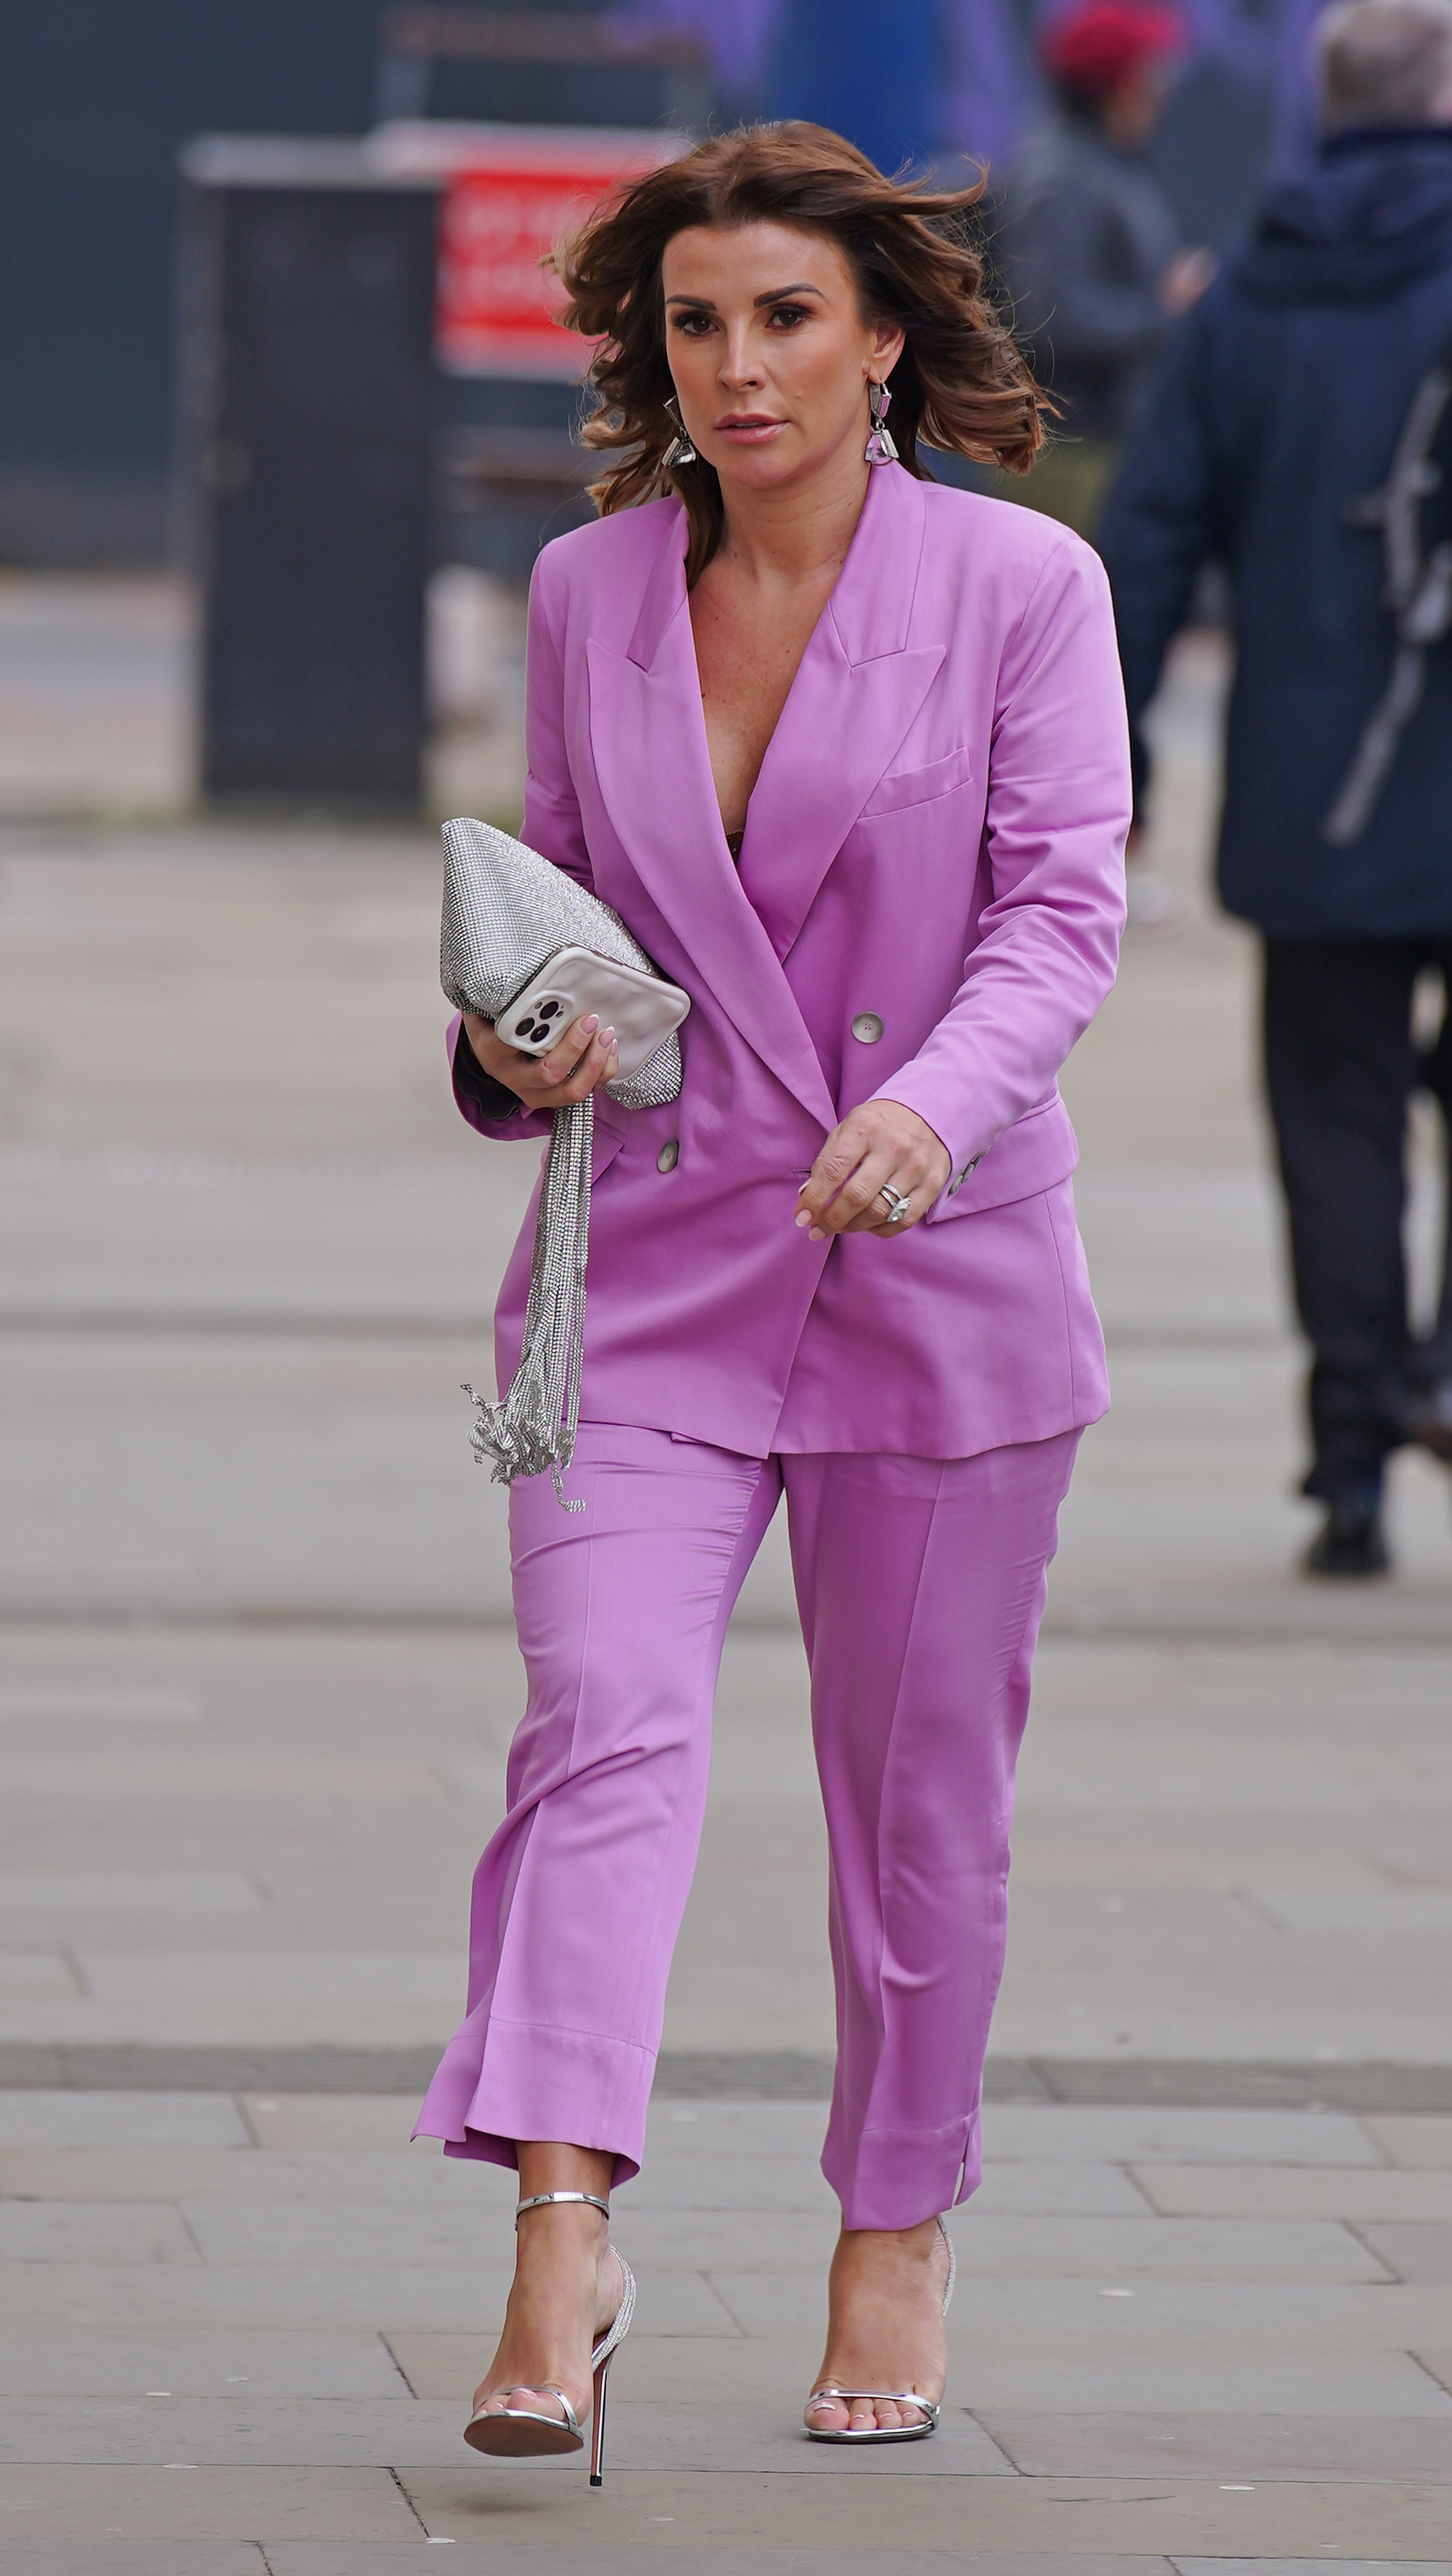 Coleen trug in Manchester das zweireihige rosa Outfit